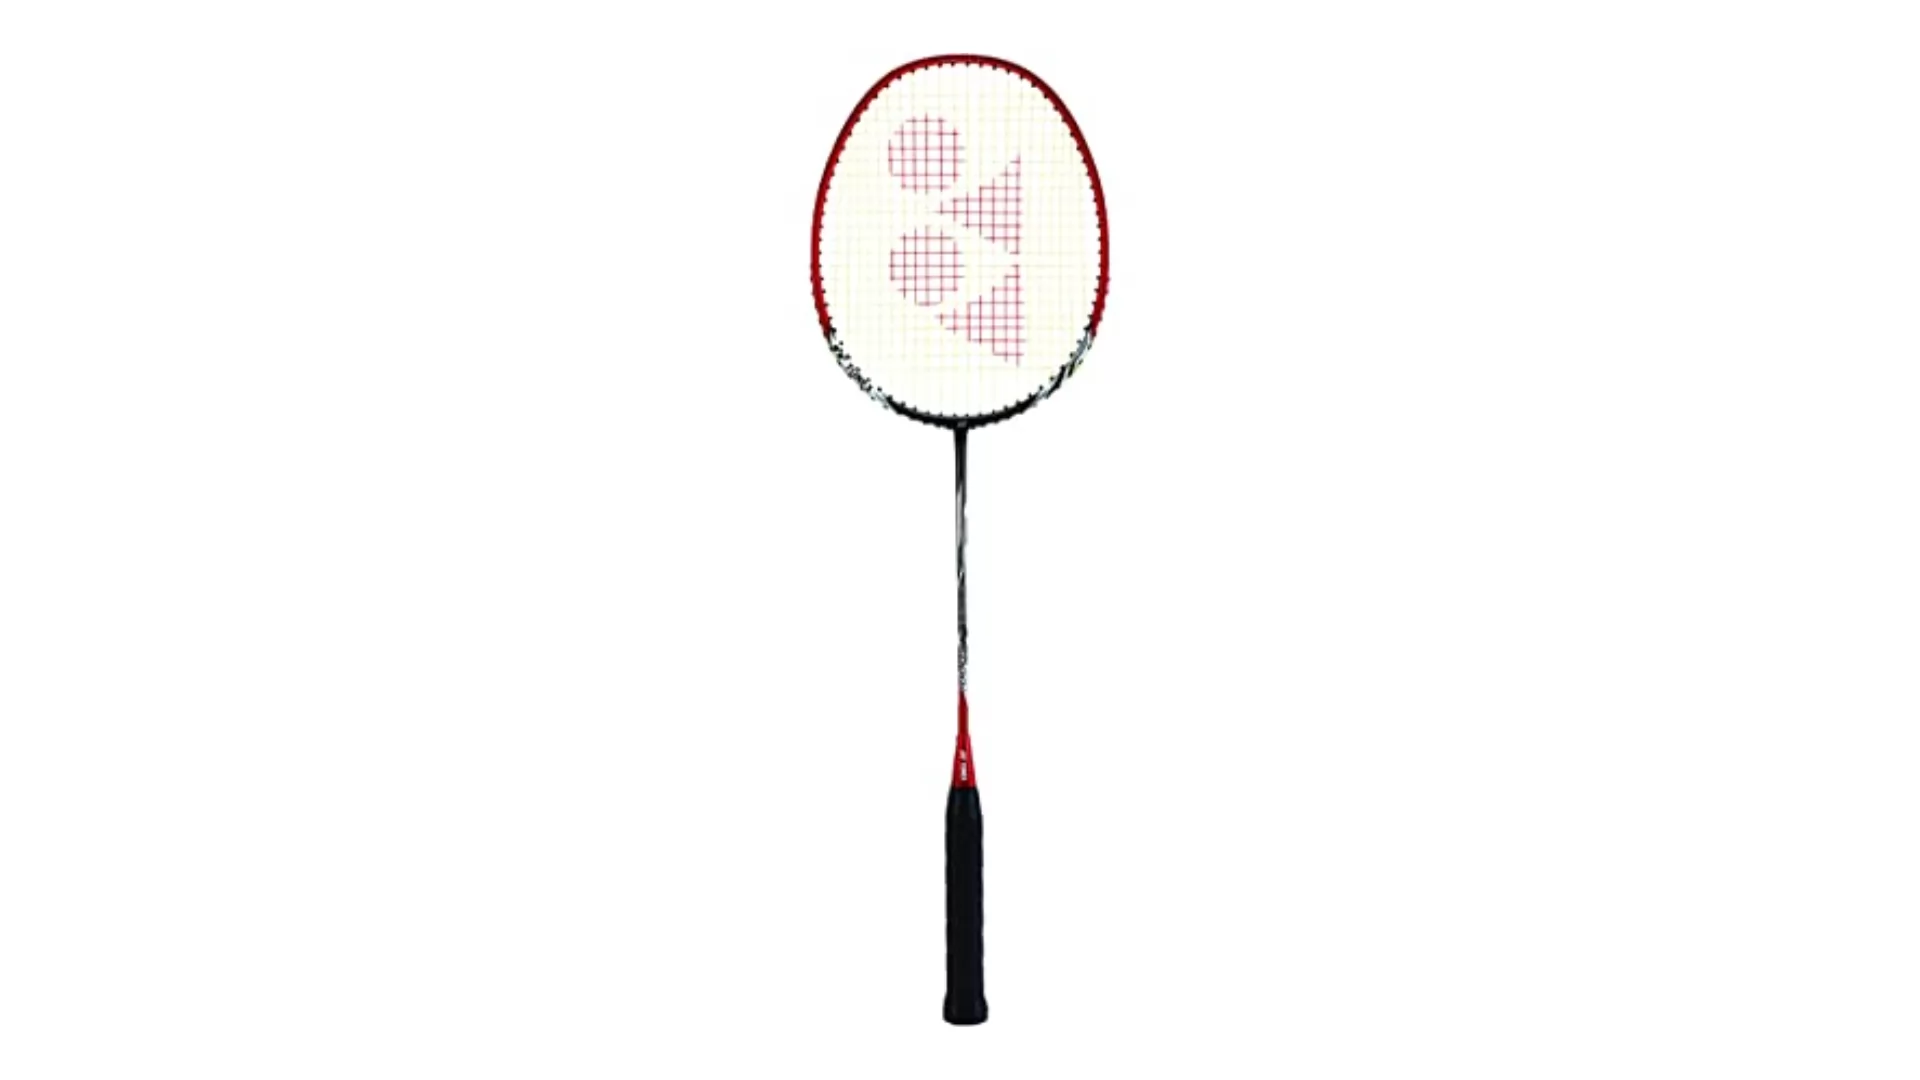 YONEX Nanoray 6000I G4-U Aluminum Badminton Racquet with Full Cover